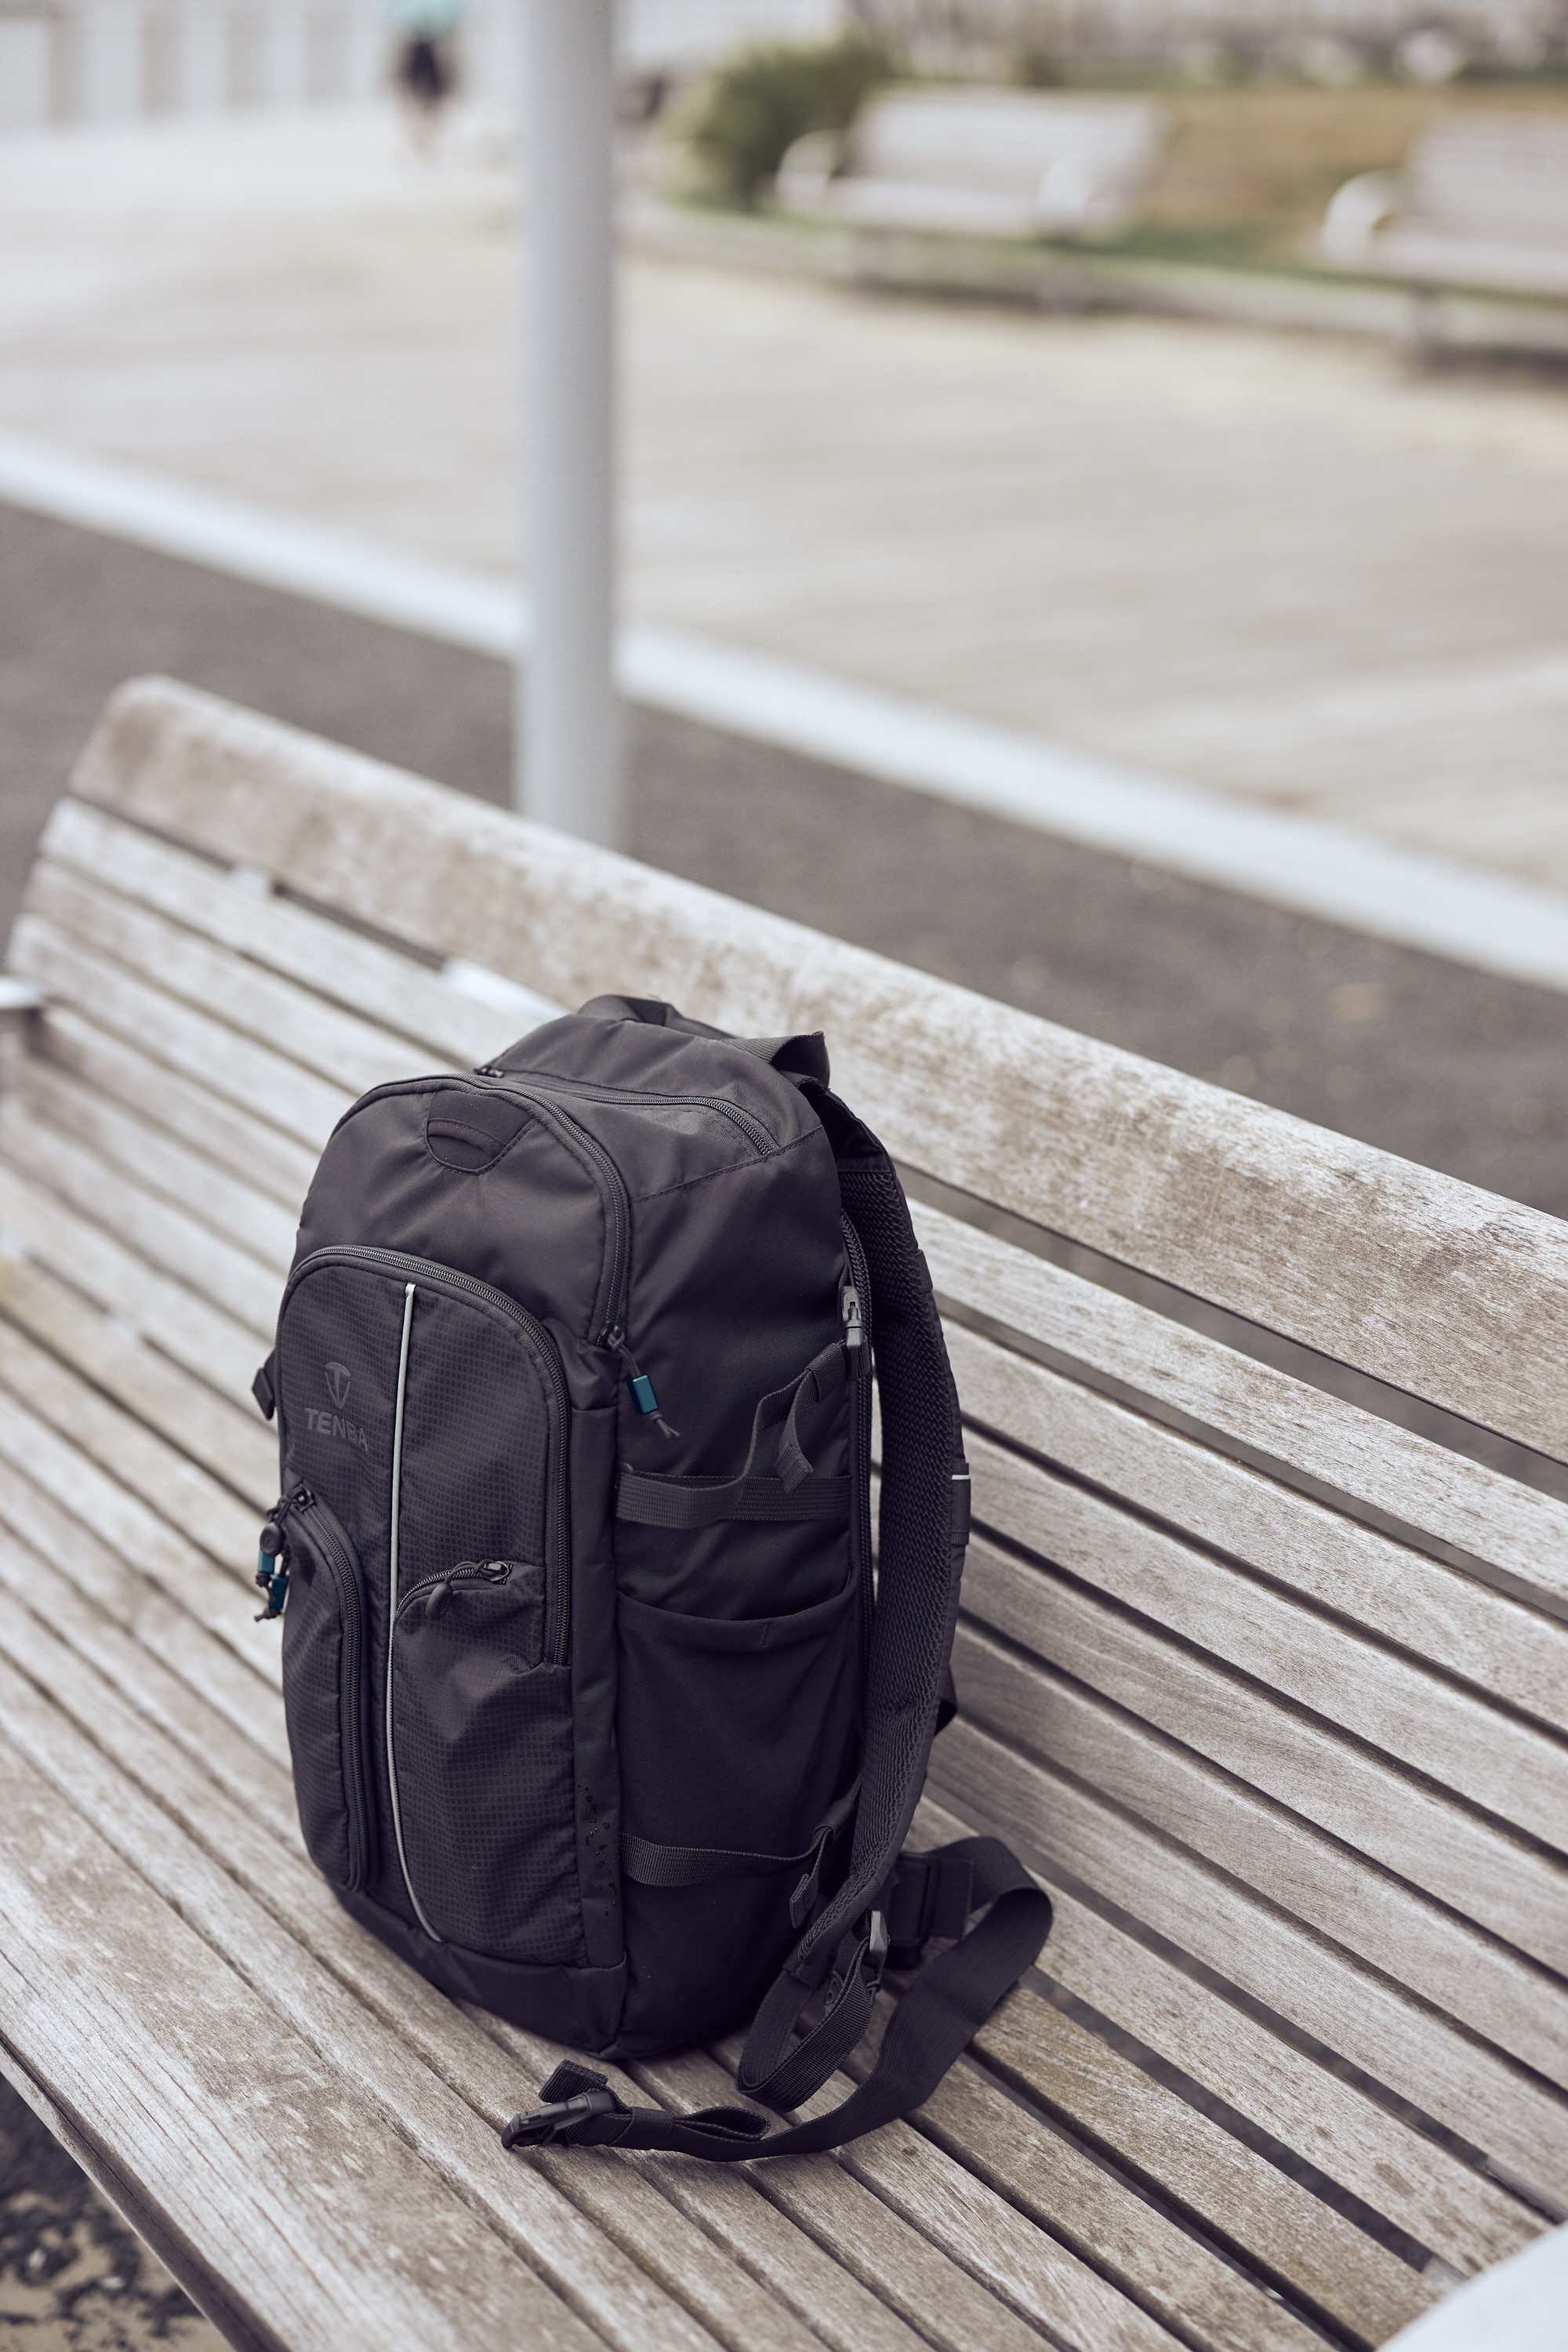 Backpack In-Between Tenba Review: Bag) 16L Shootout DSLR (The